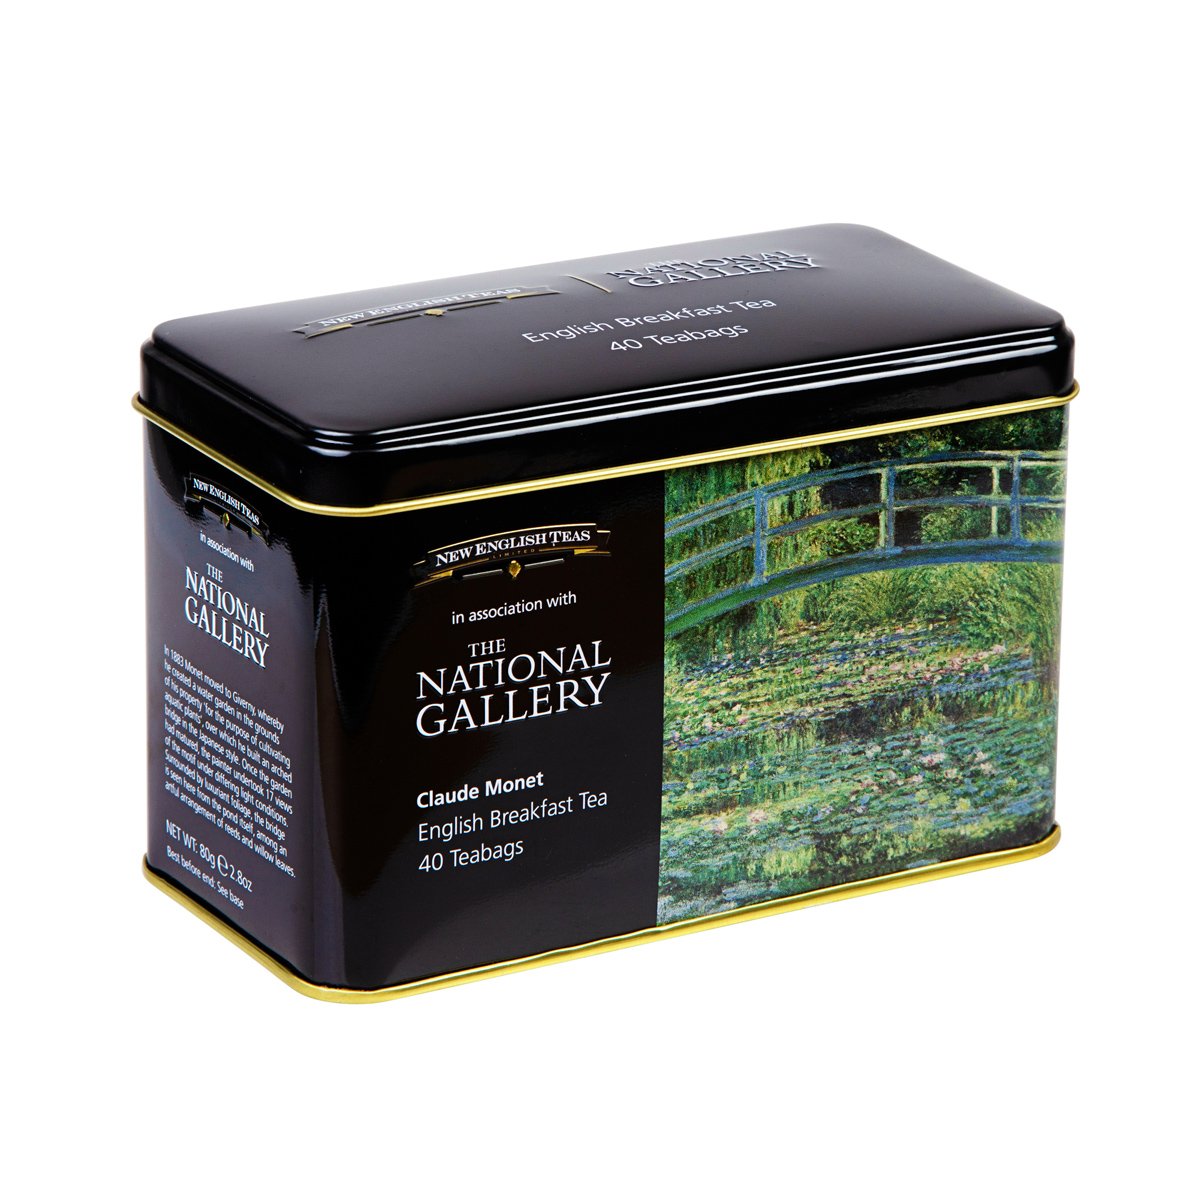 New English Teas The National Gallery Monet Tea Tin with 40 English Breakfast Teabags